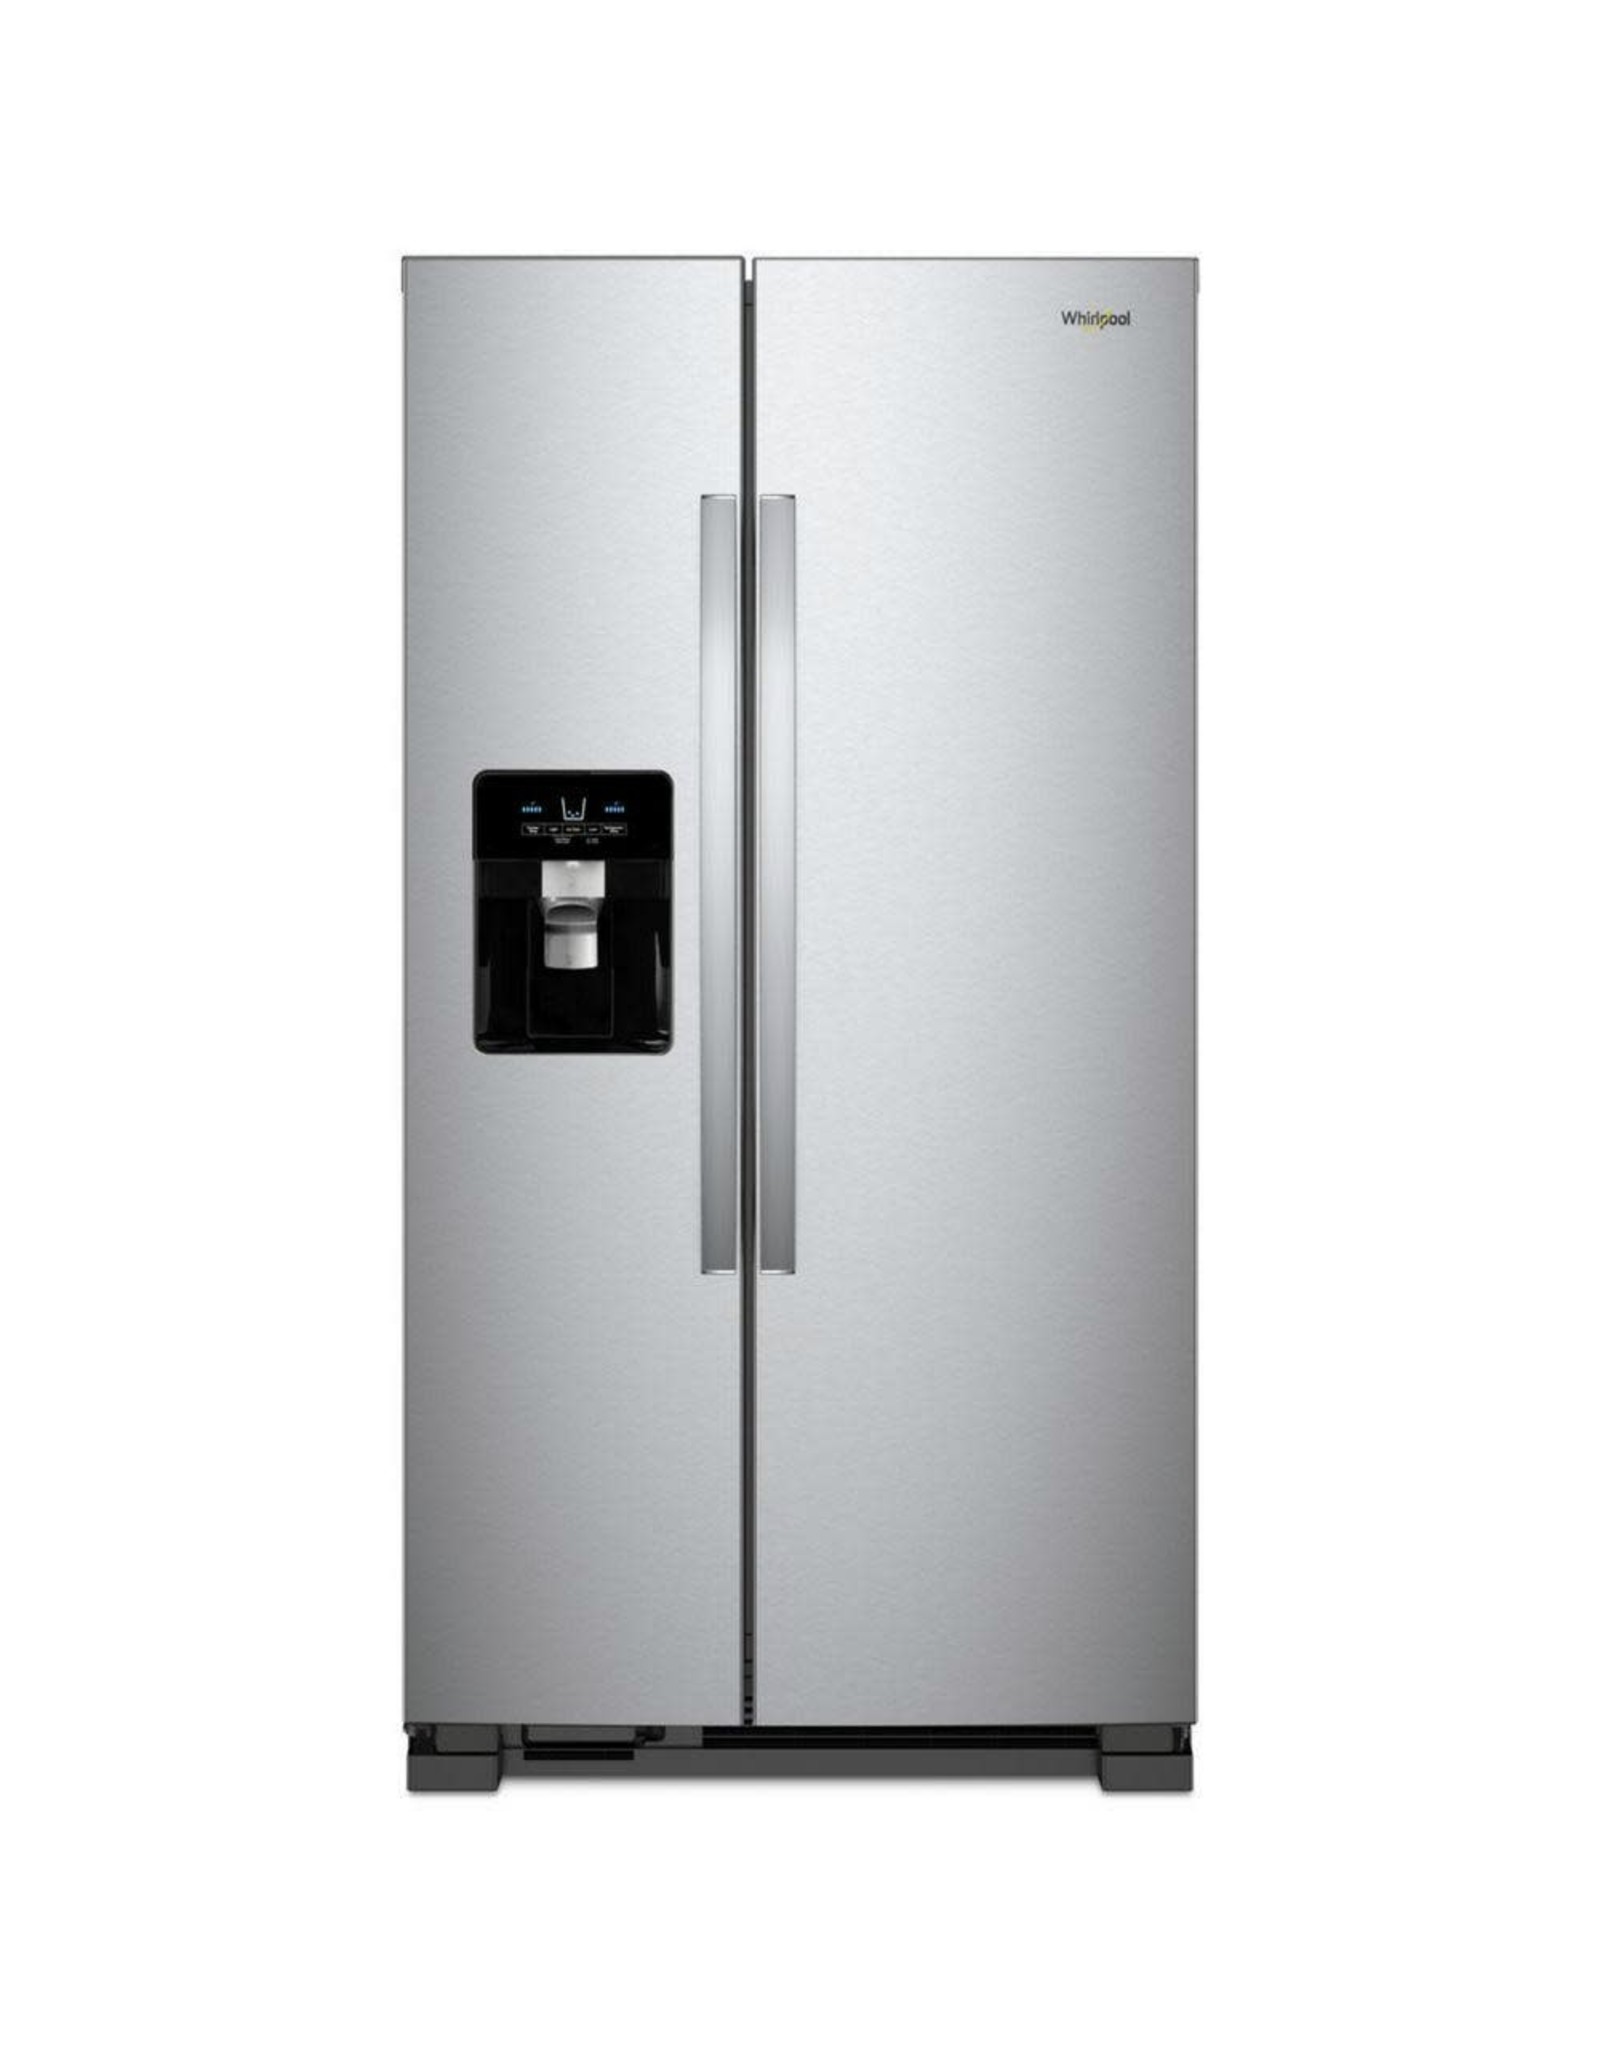 WRS325SDHZ 25 cu. ft. Side by Side Refrigerator in Fingerprint Resistant Stainless Steel